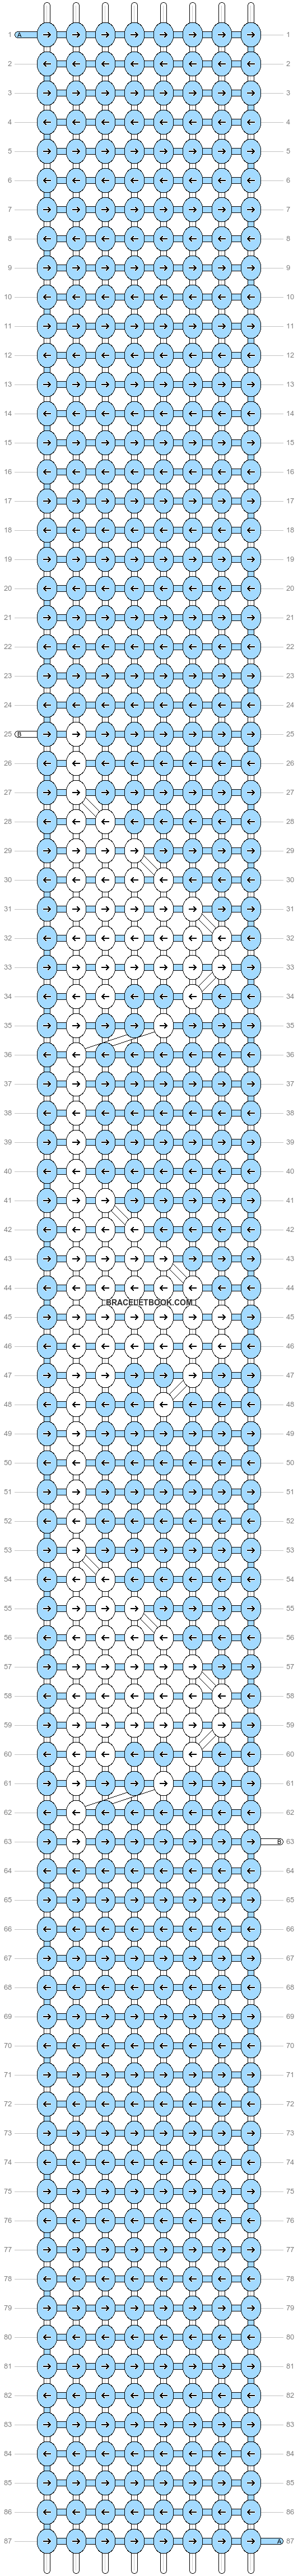 Alpha pattern #57530 variation #100846 pattern